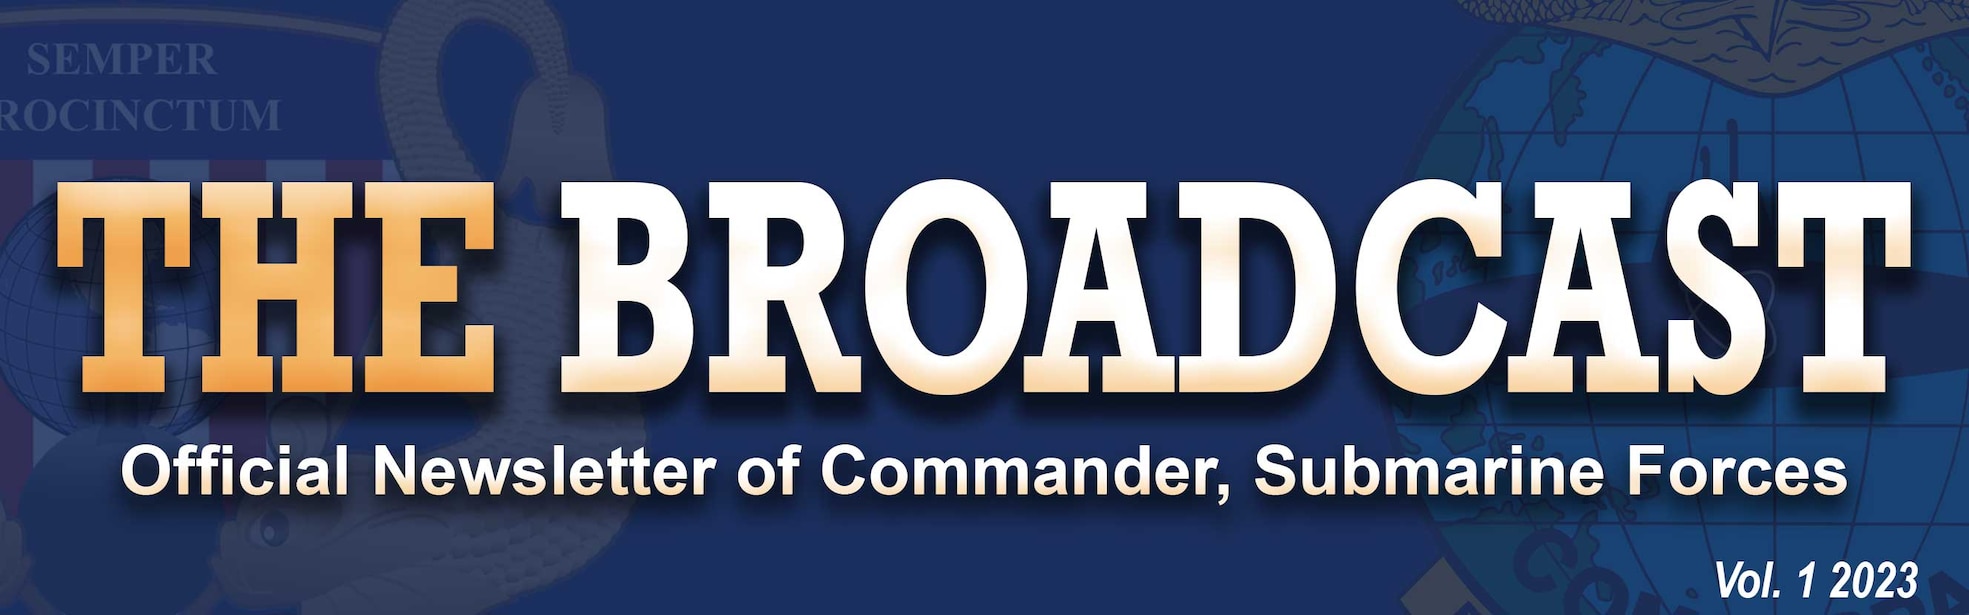 Website graphic for COMSUBFOR's newsletter, The Broadcast.